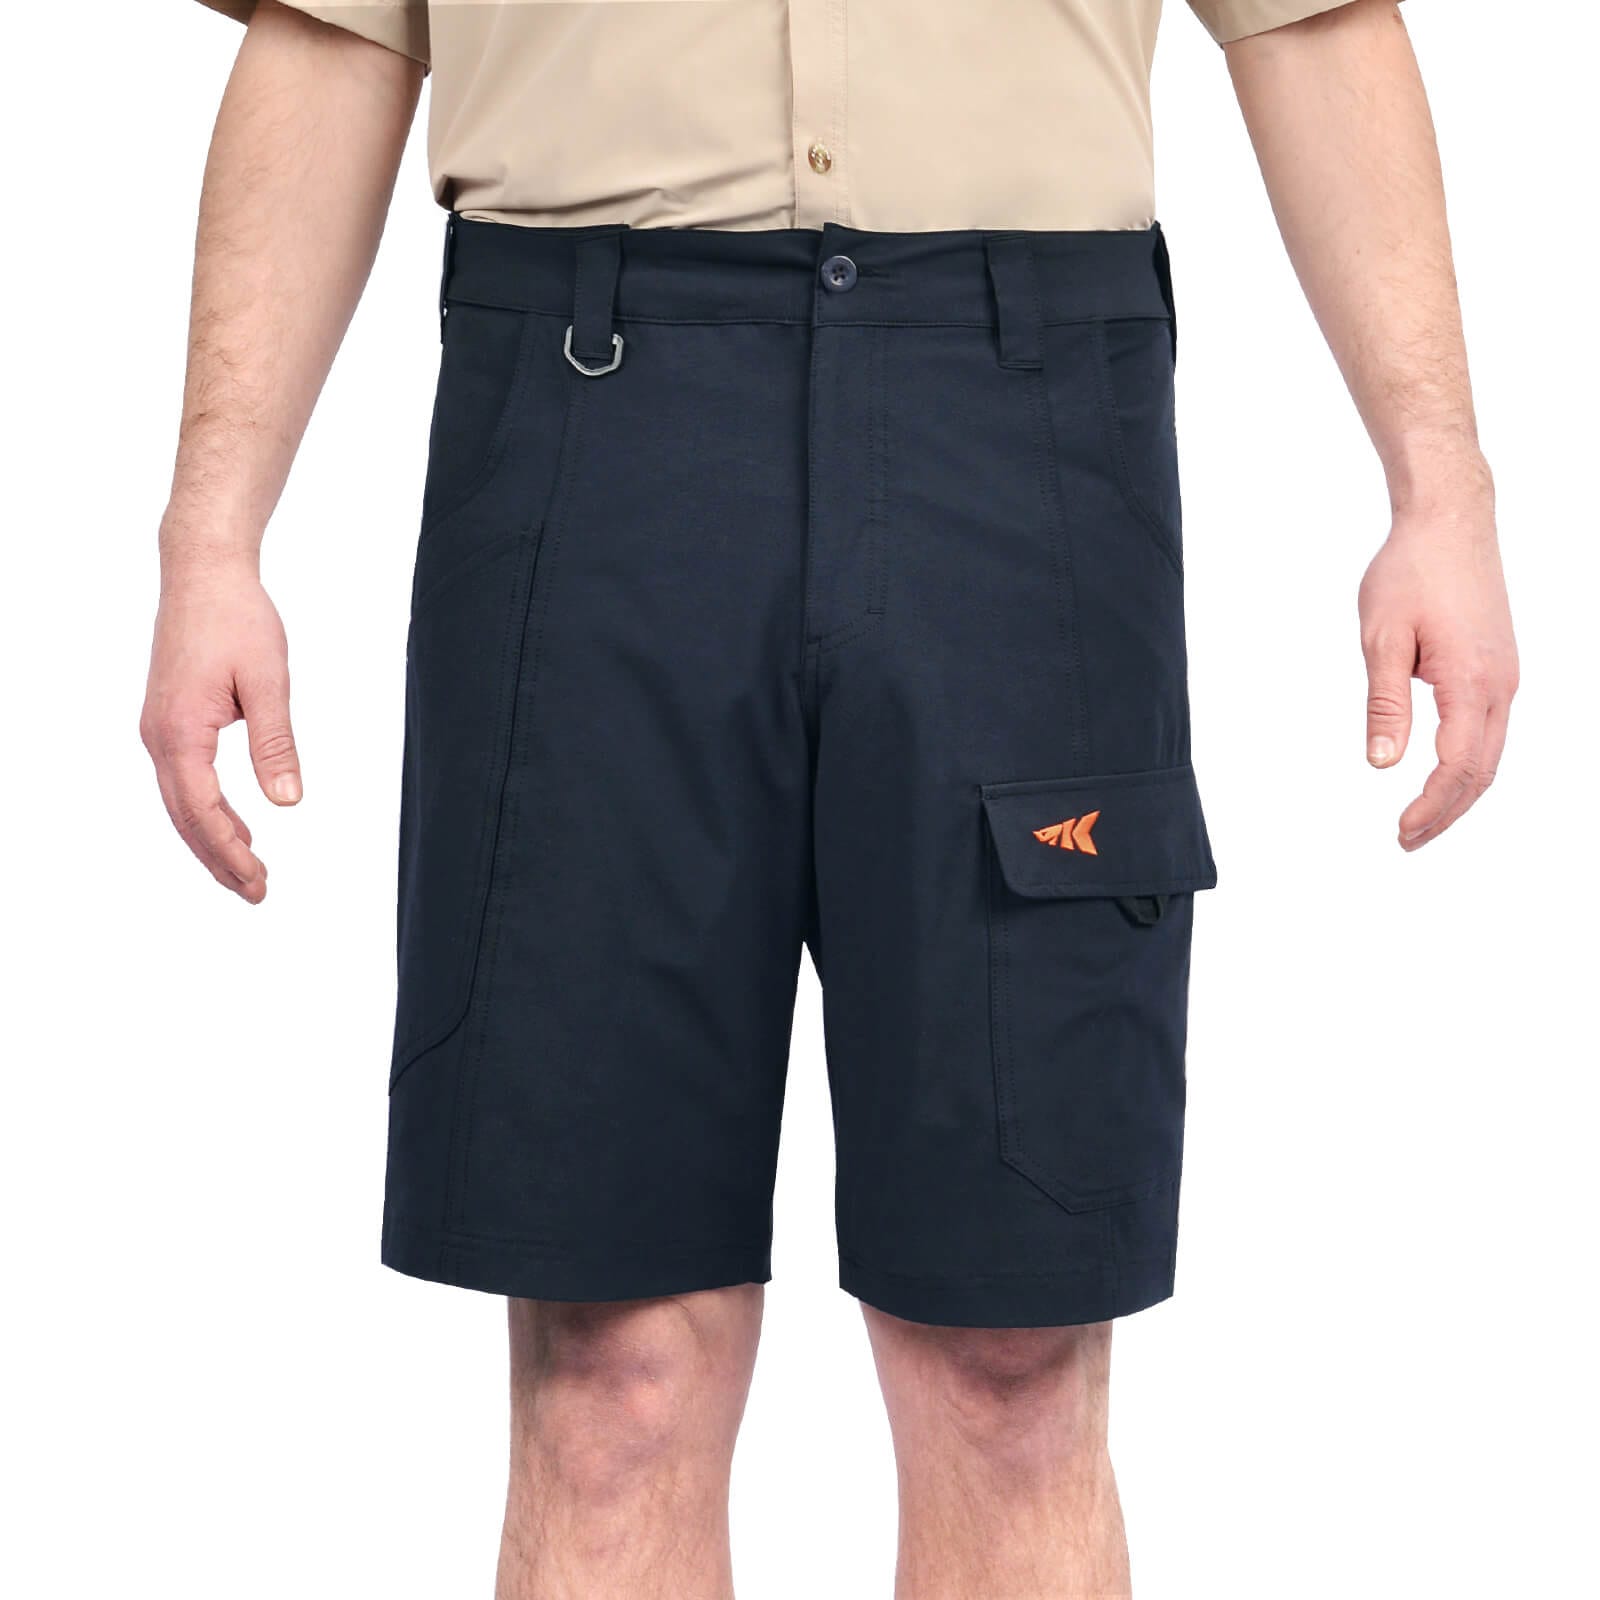 Lot of 2 Mojo Sport Fishing Gear Cargo Nylon Shorts Men's Size L # 1634 NWT